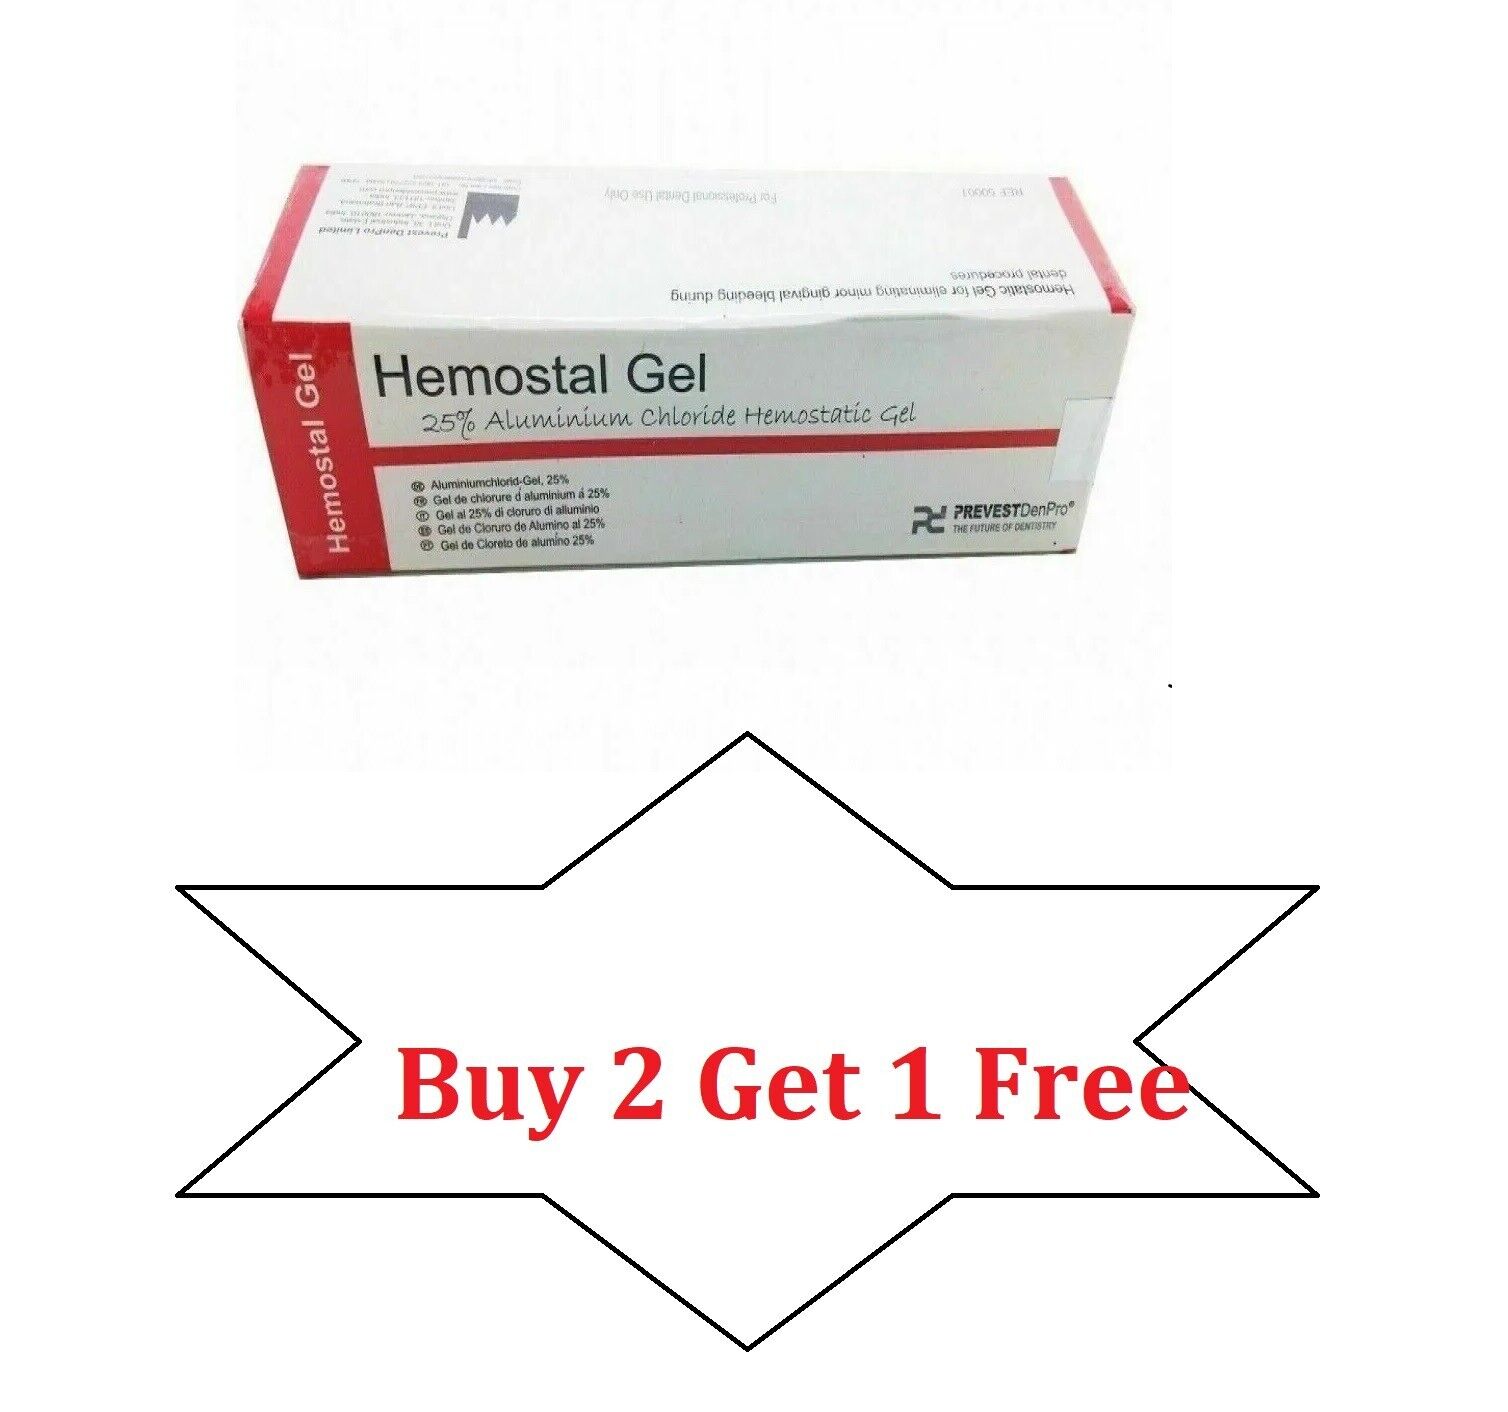 Hemostal Gel 25% Aluminum Chloride Hemostatic Agent Dental Care Buy 2 Get 1 Free